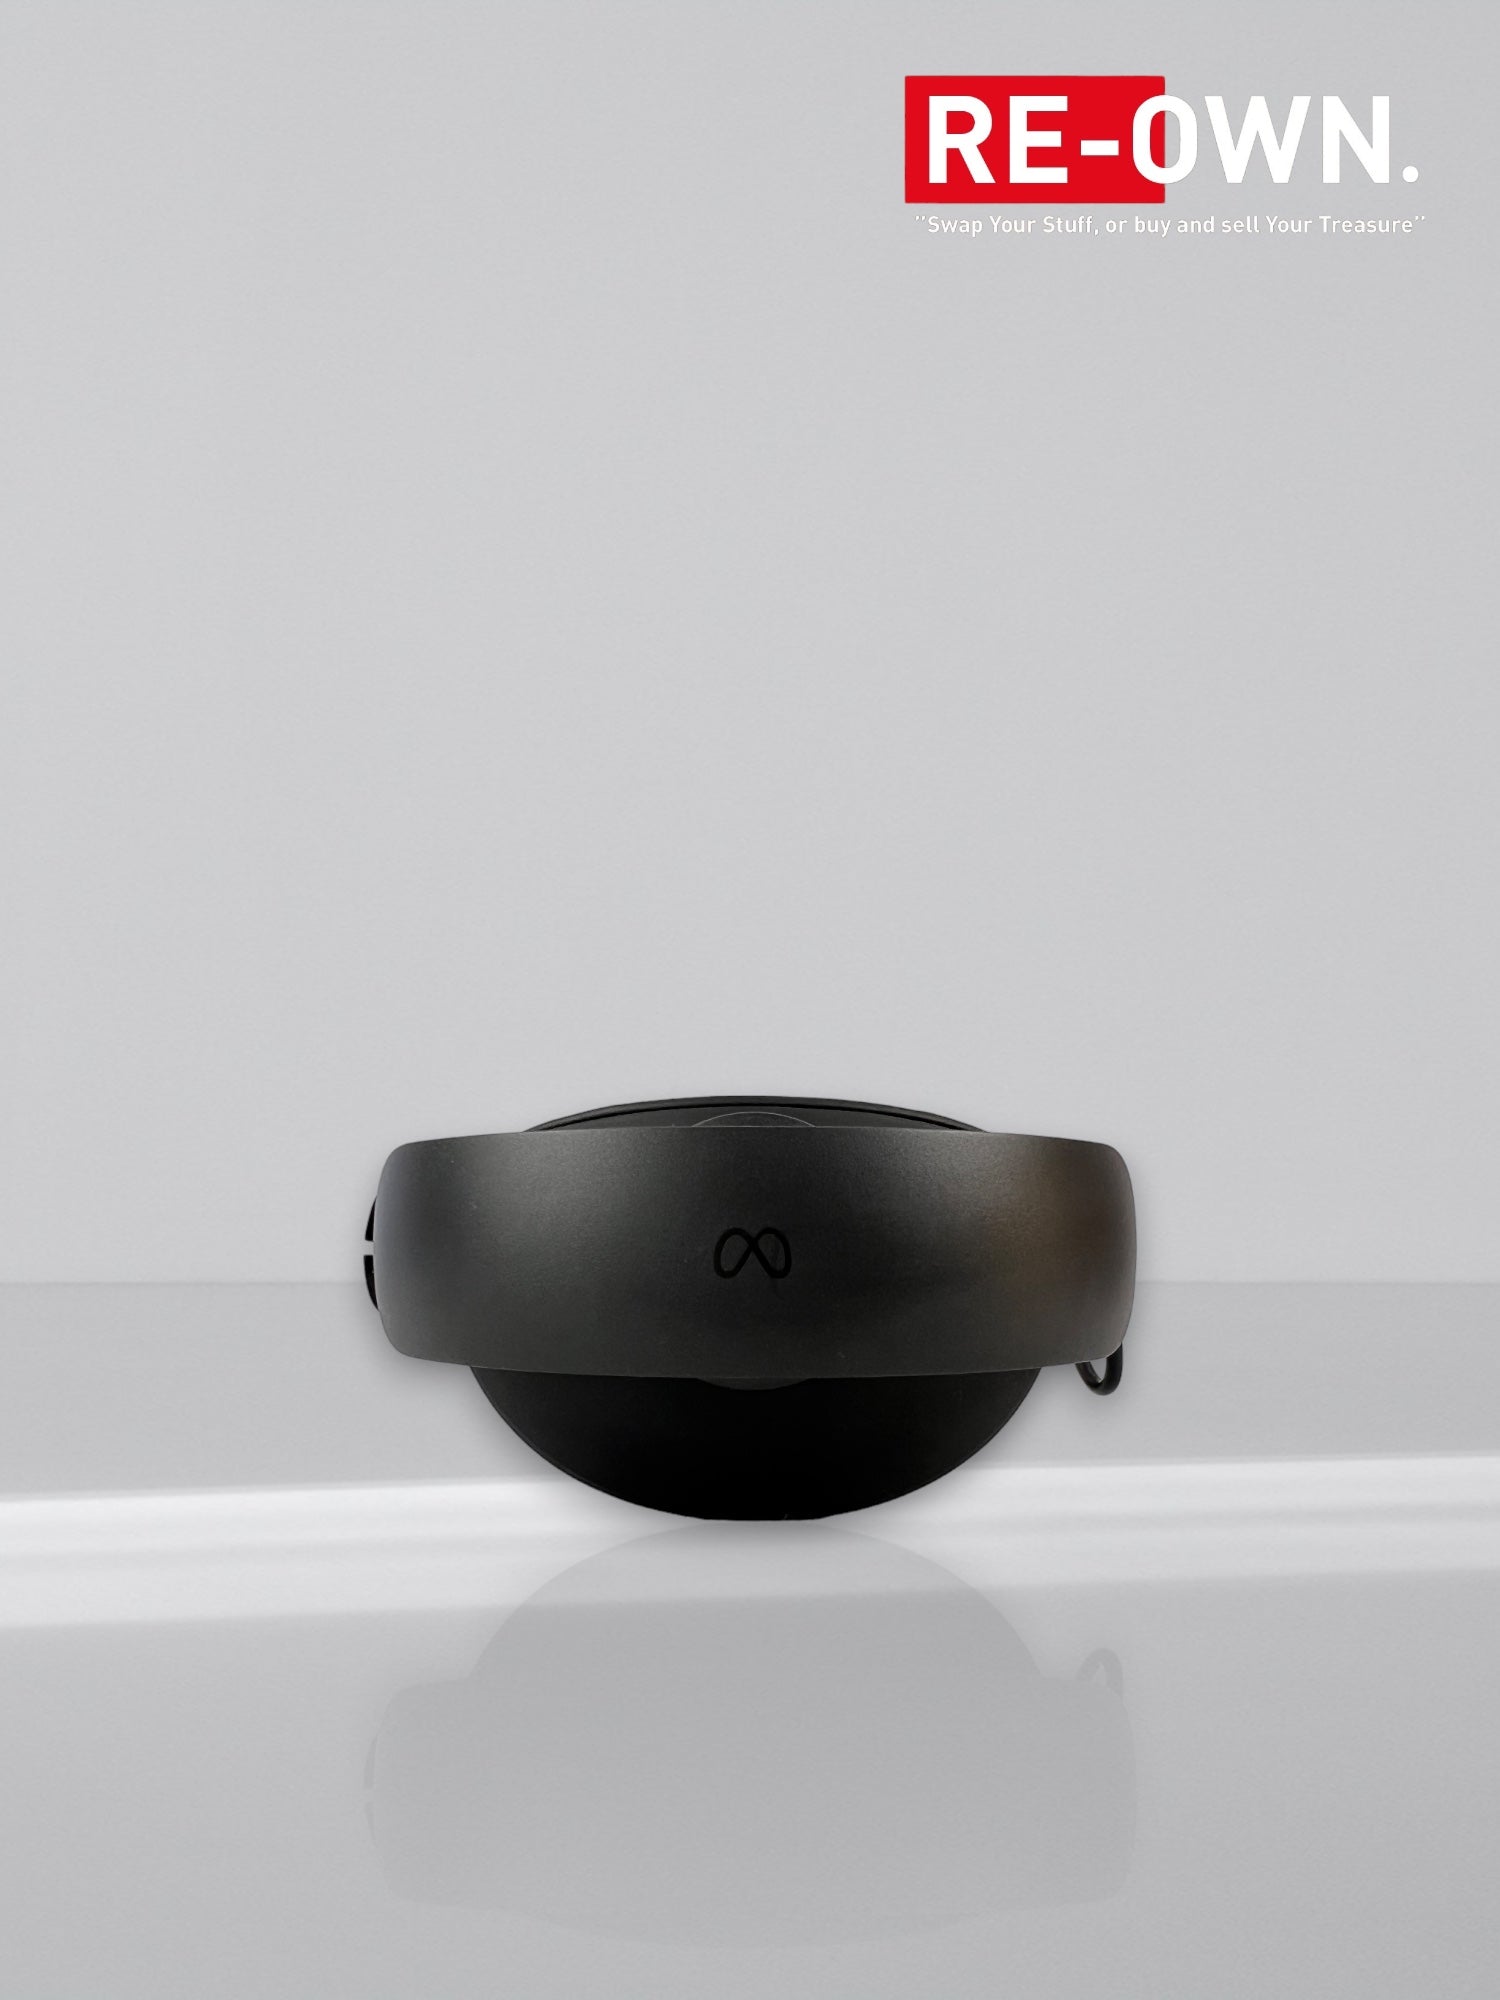 Meta Quest Pro 256GB / VR bril